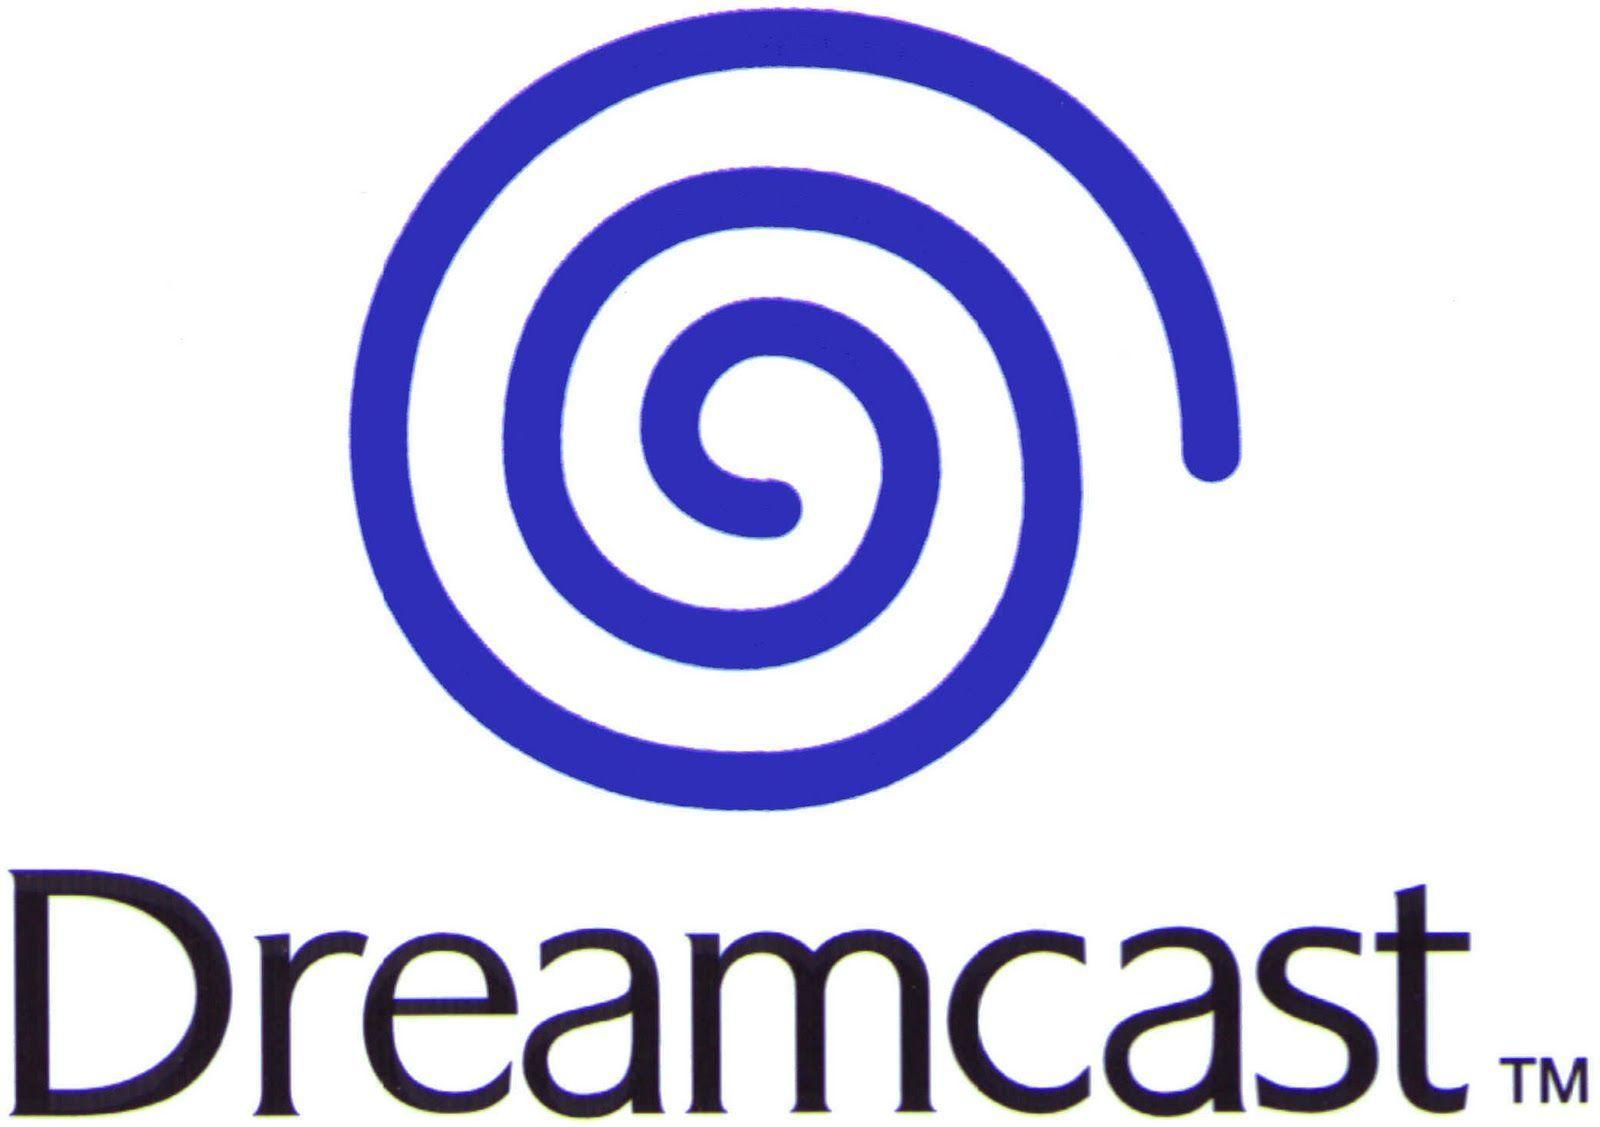 Dreamcast Logo - Image result for dreamcast logo | Miles | Pinterest | Games and Logos